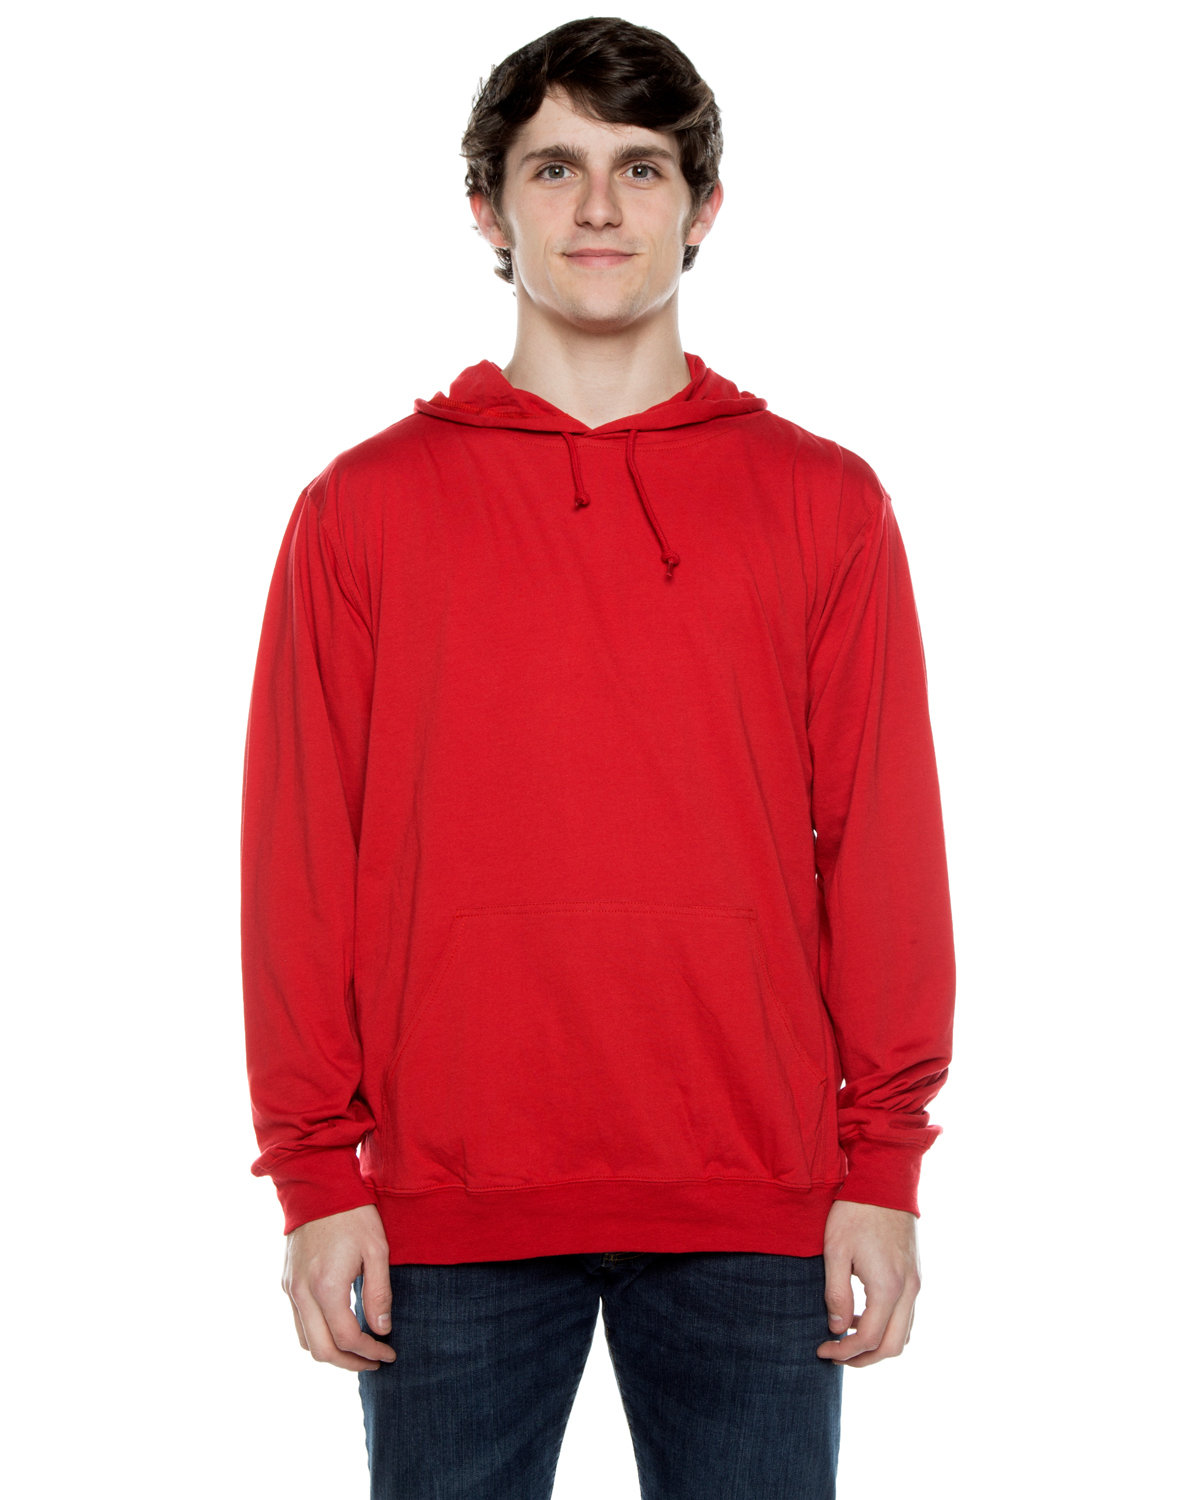 Beimar Drop Ship Unisex 4.5 oz. Long-Sleeve Jersey Hooded T-Shirt SCARLET 